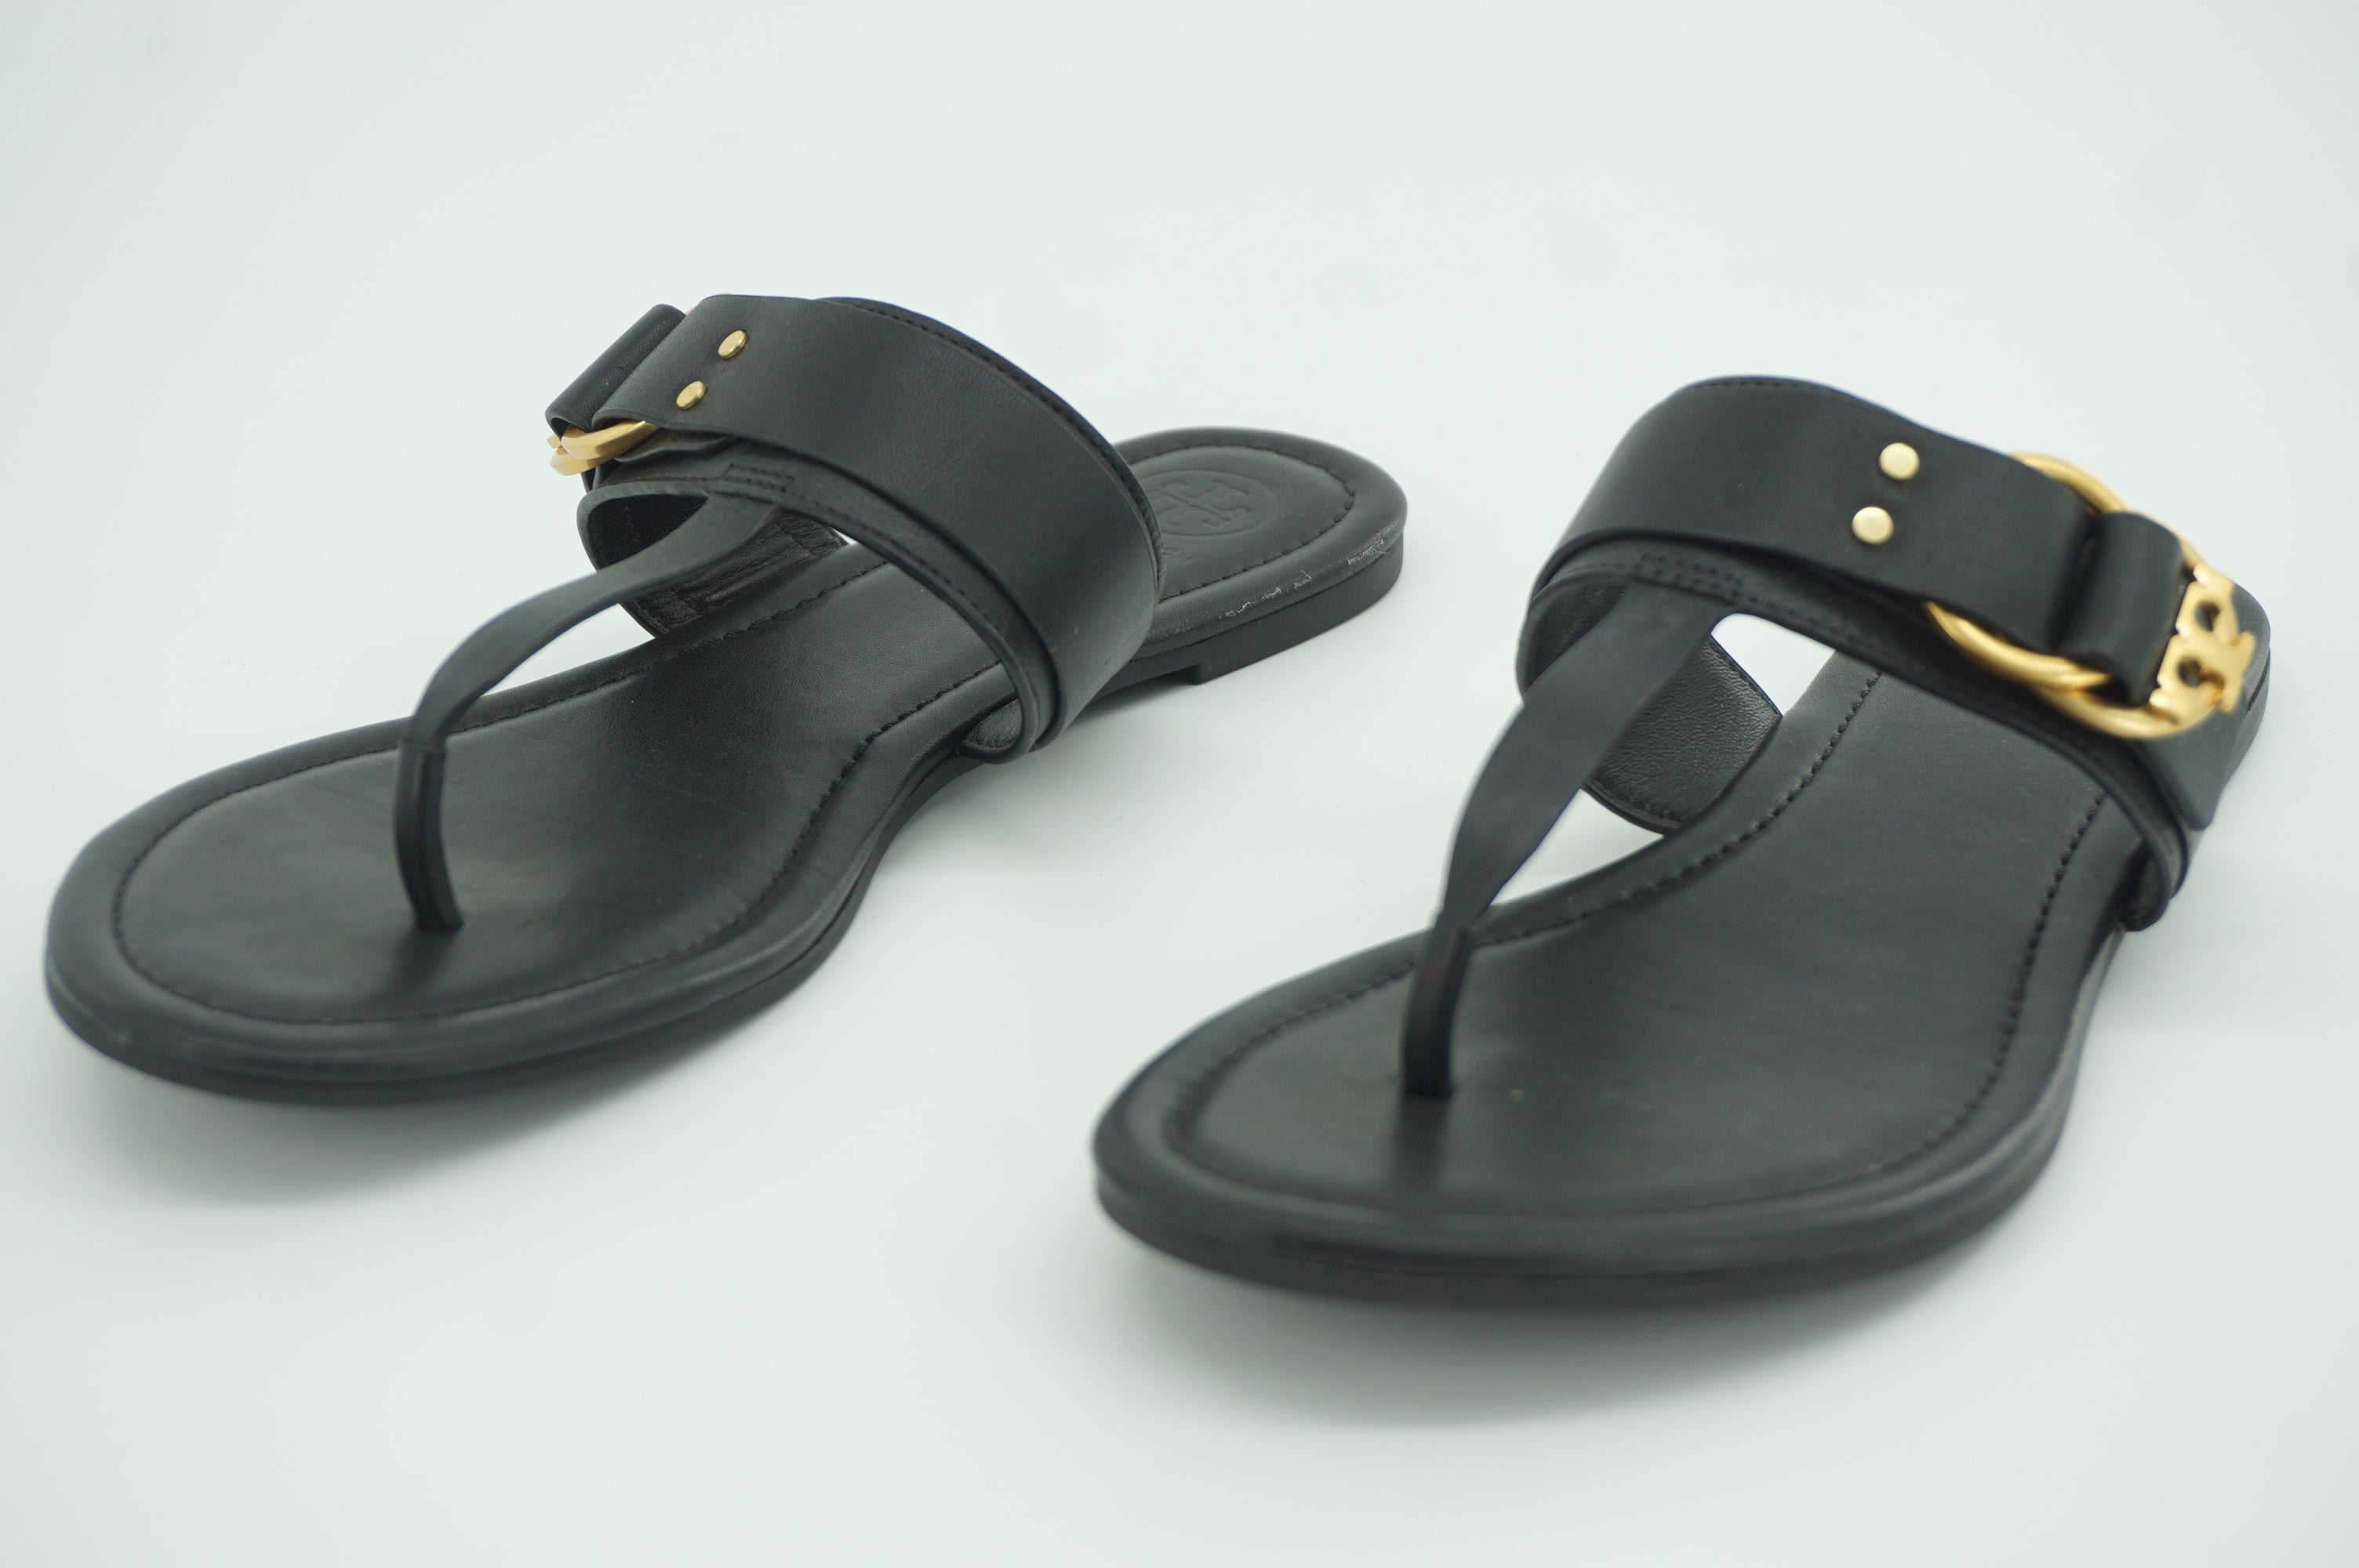 Tory Burch Marsden Black Flat Logo Thong Sandals Size 8.5 Strappy NIB $229